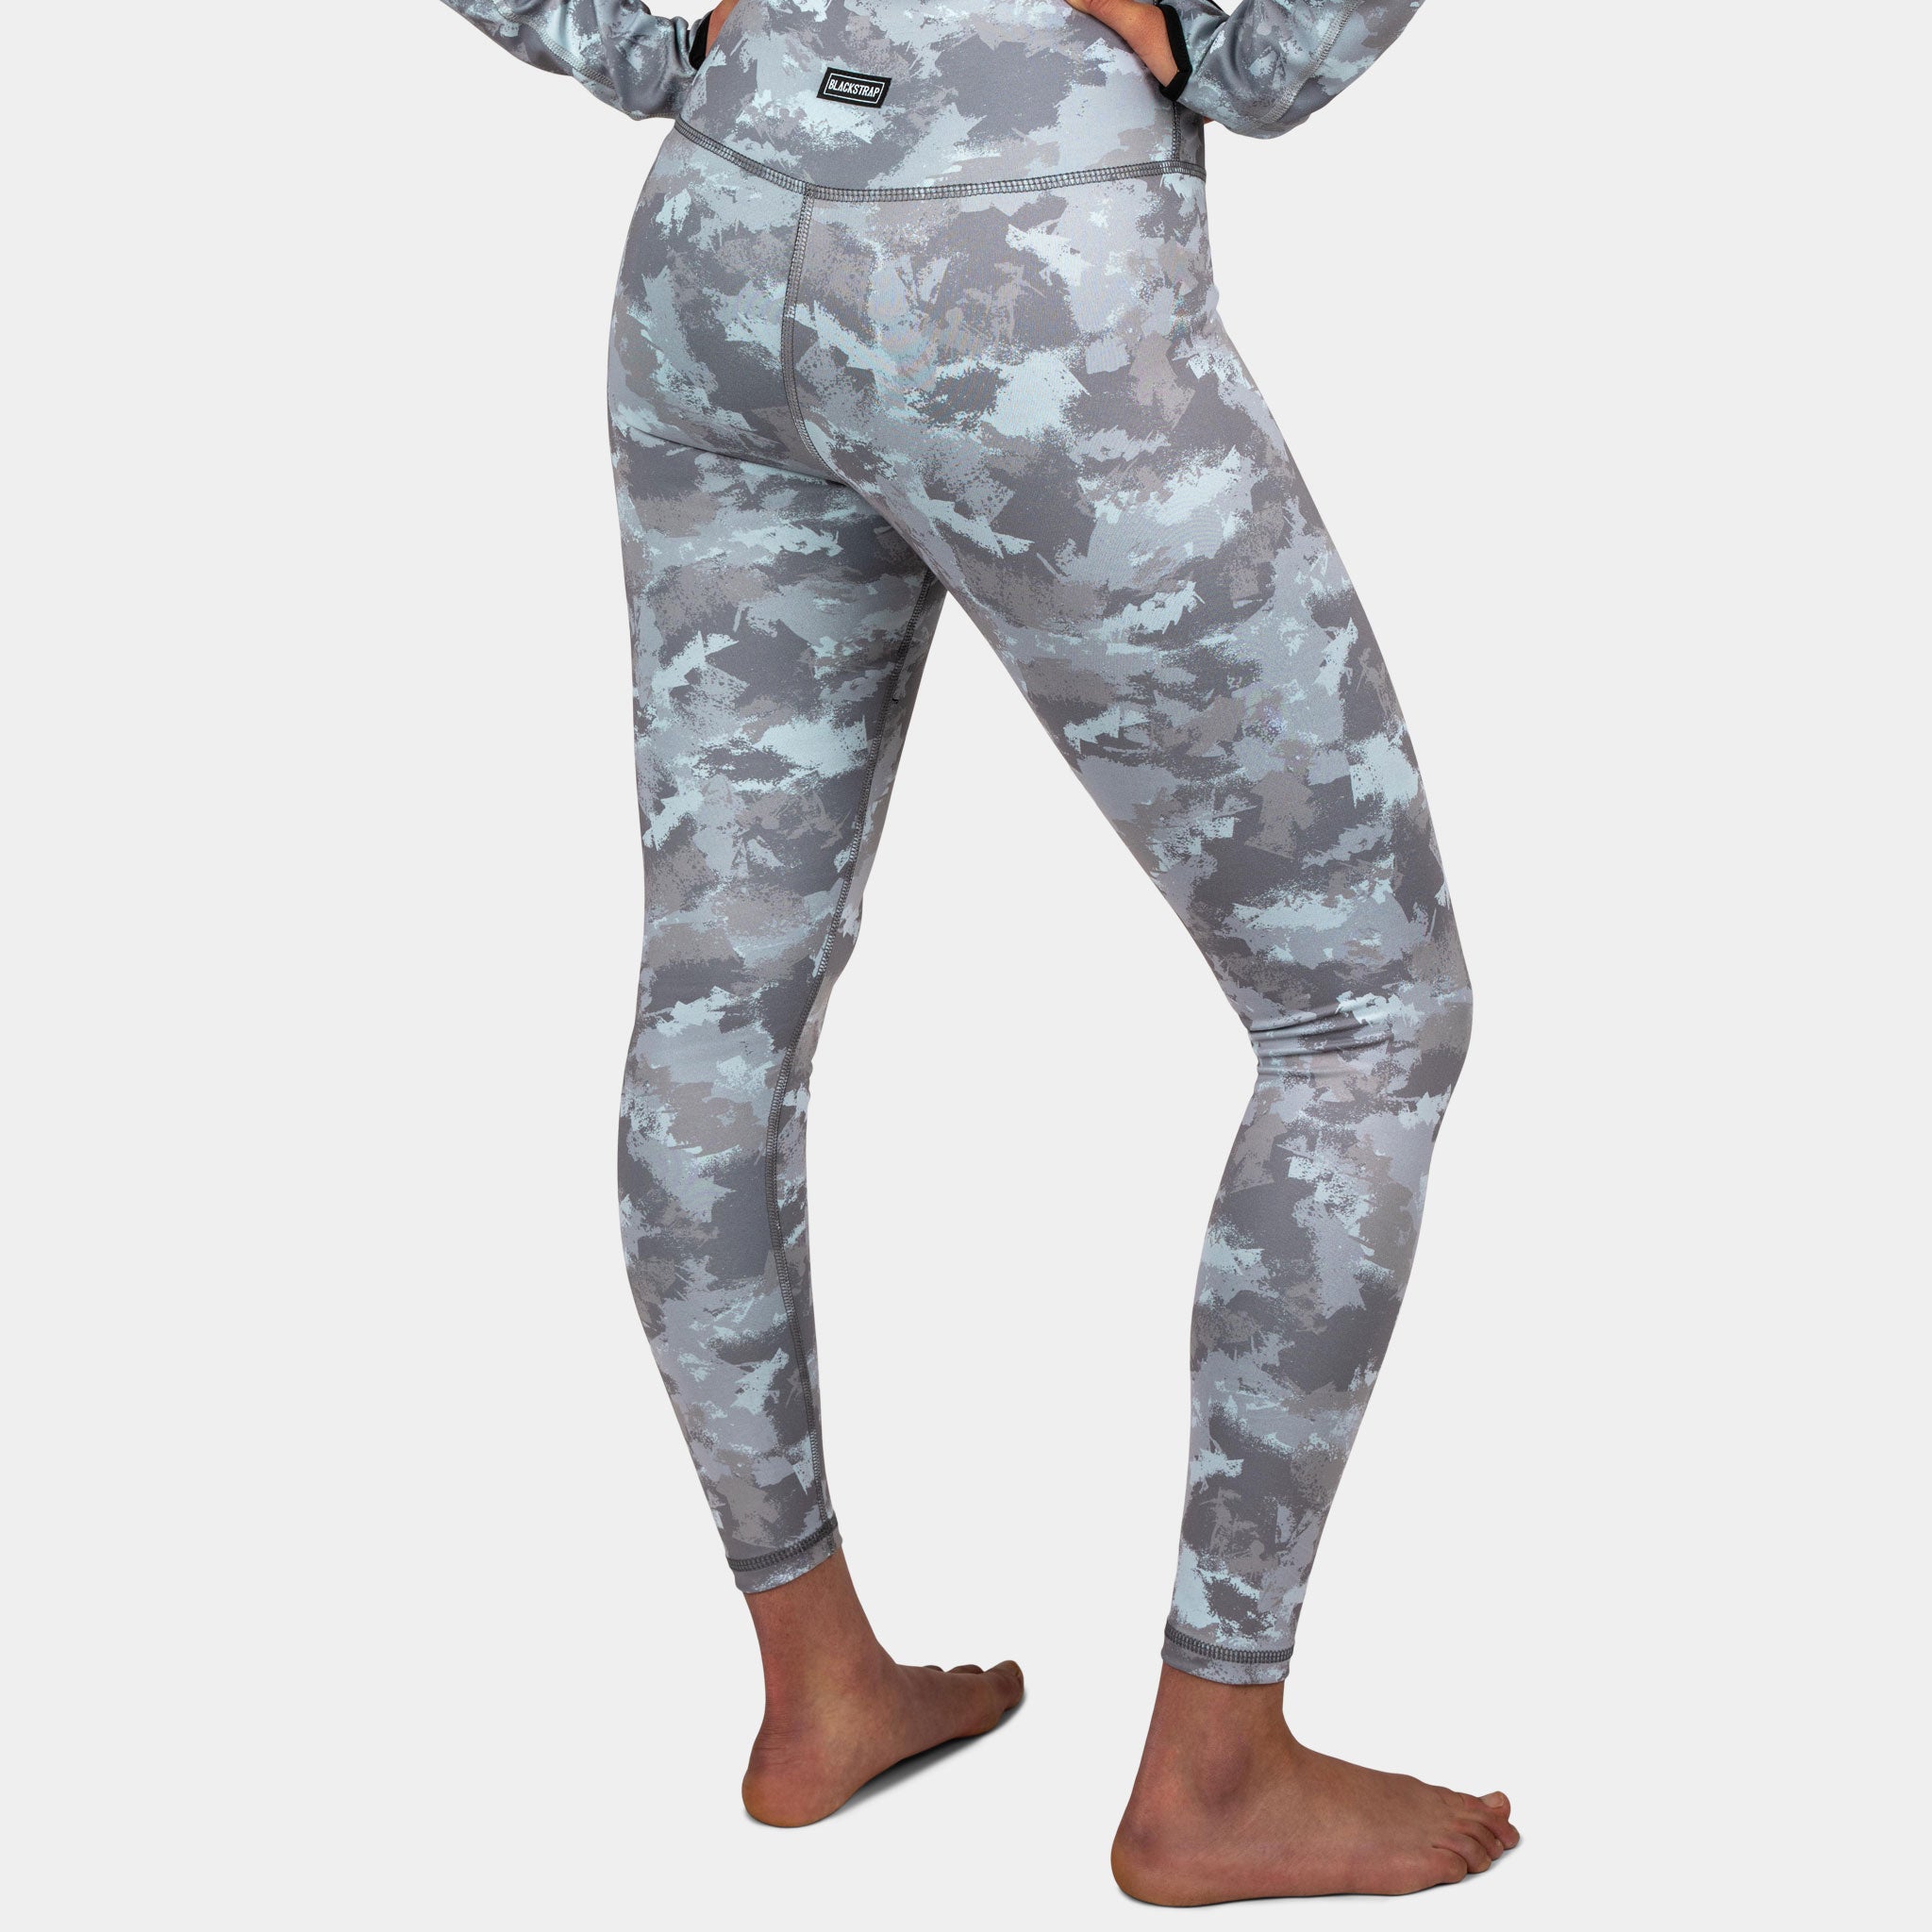 Spyder Legging Womens Xl Black Gray Camouflage Active Pants